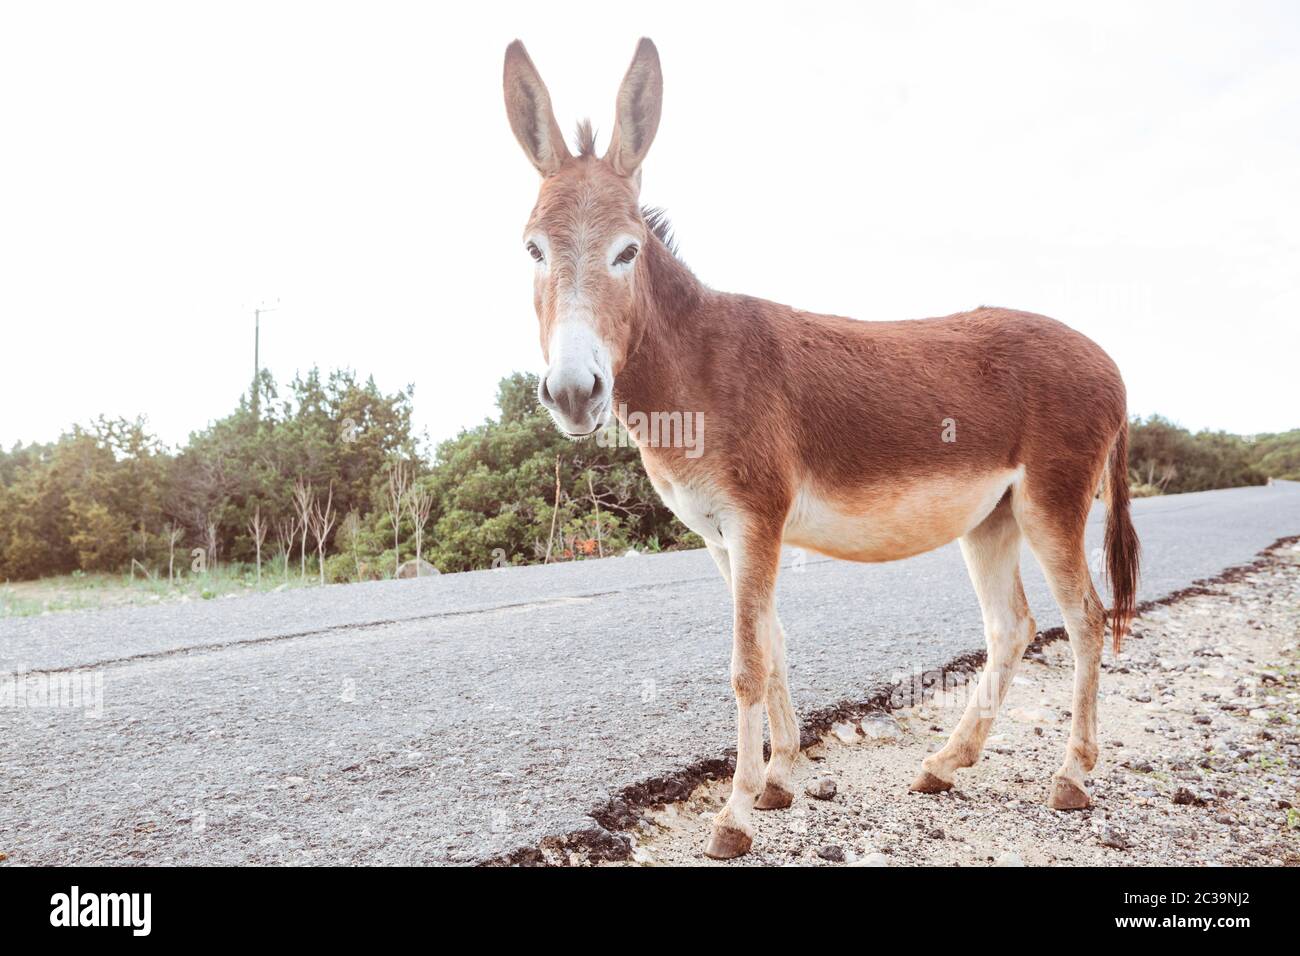 Wid donkey Stock Photo